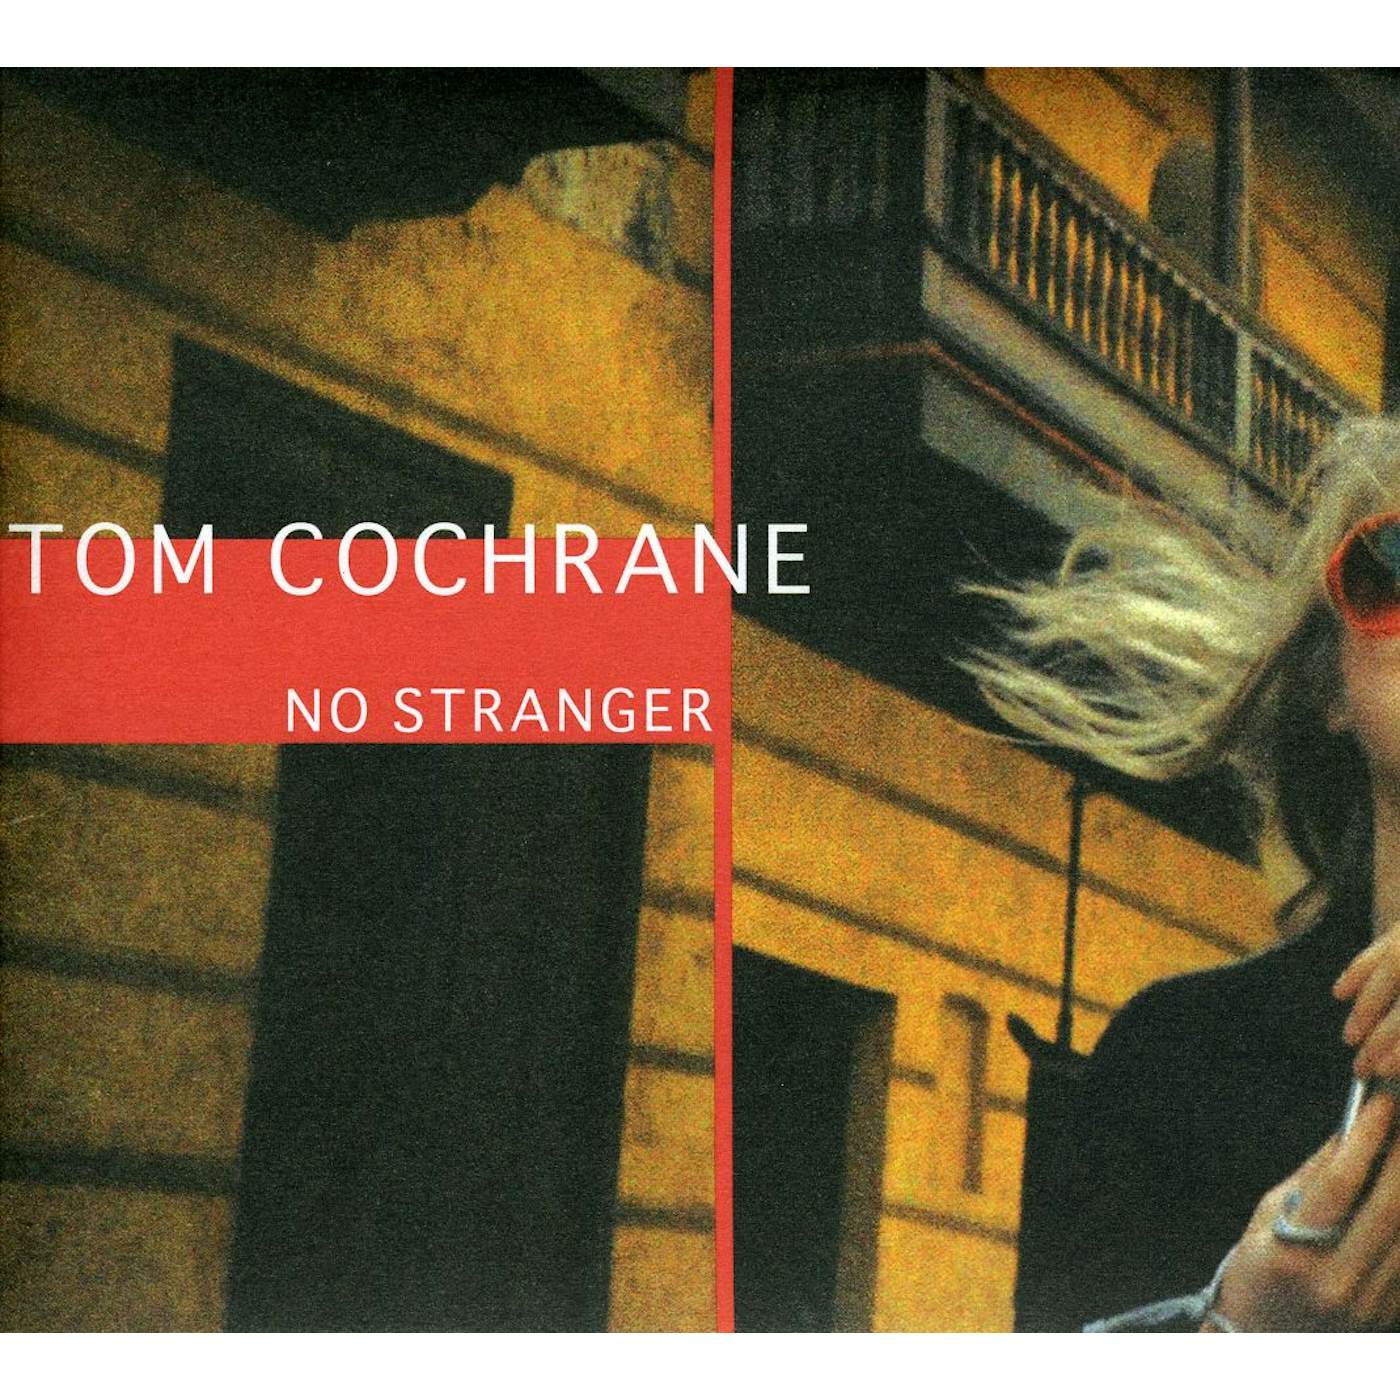 Tom Cochrane NO STRANGER CD